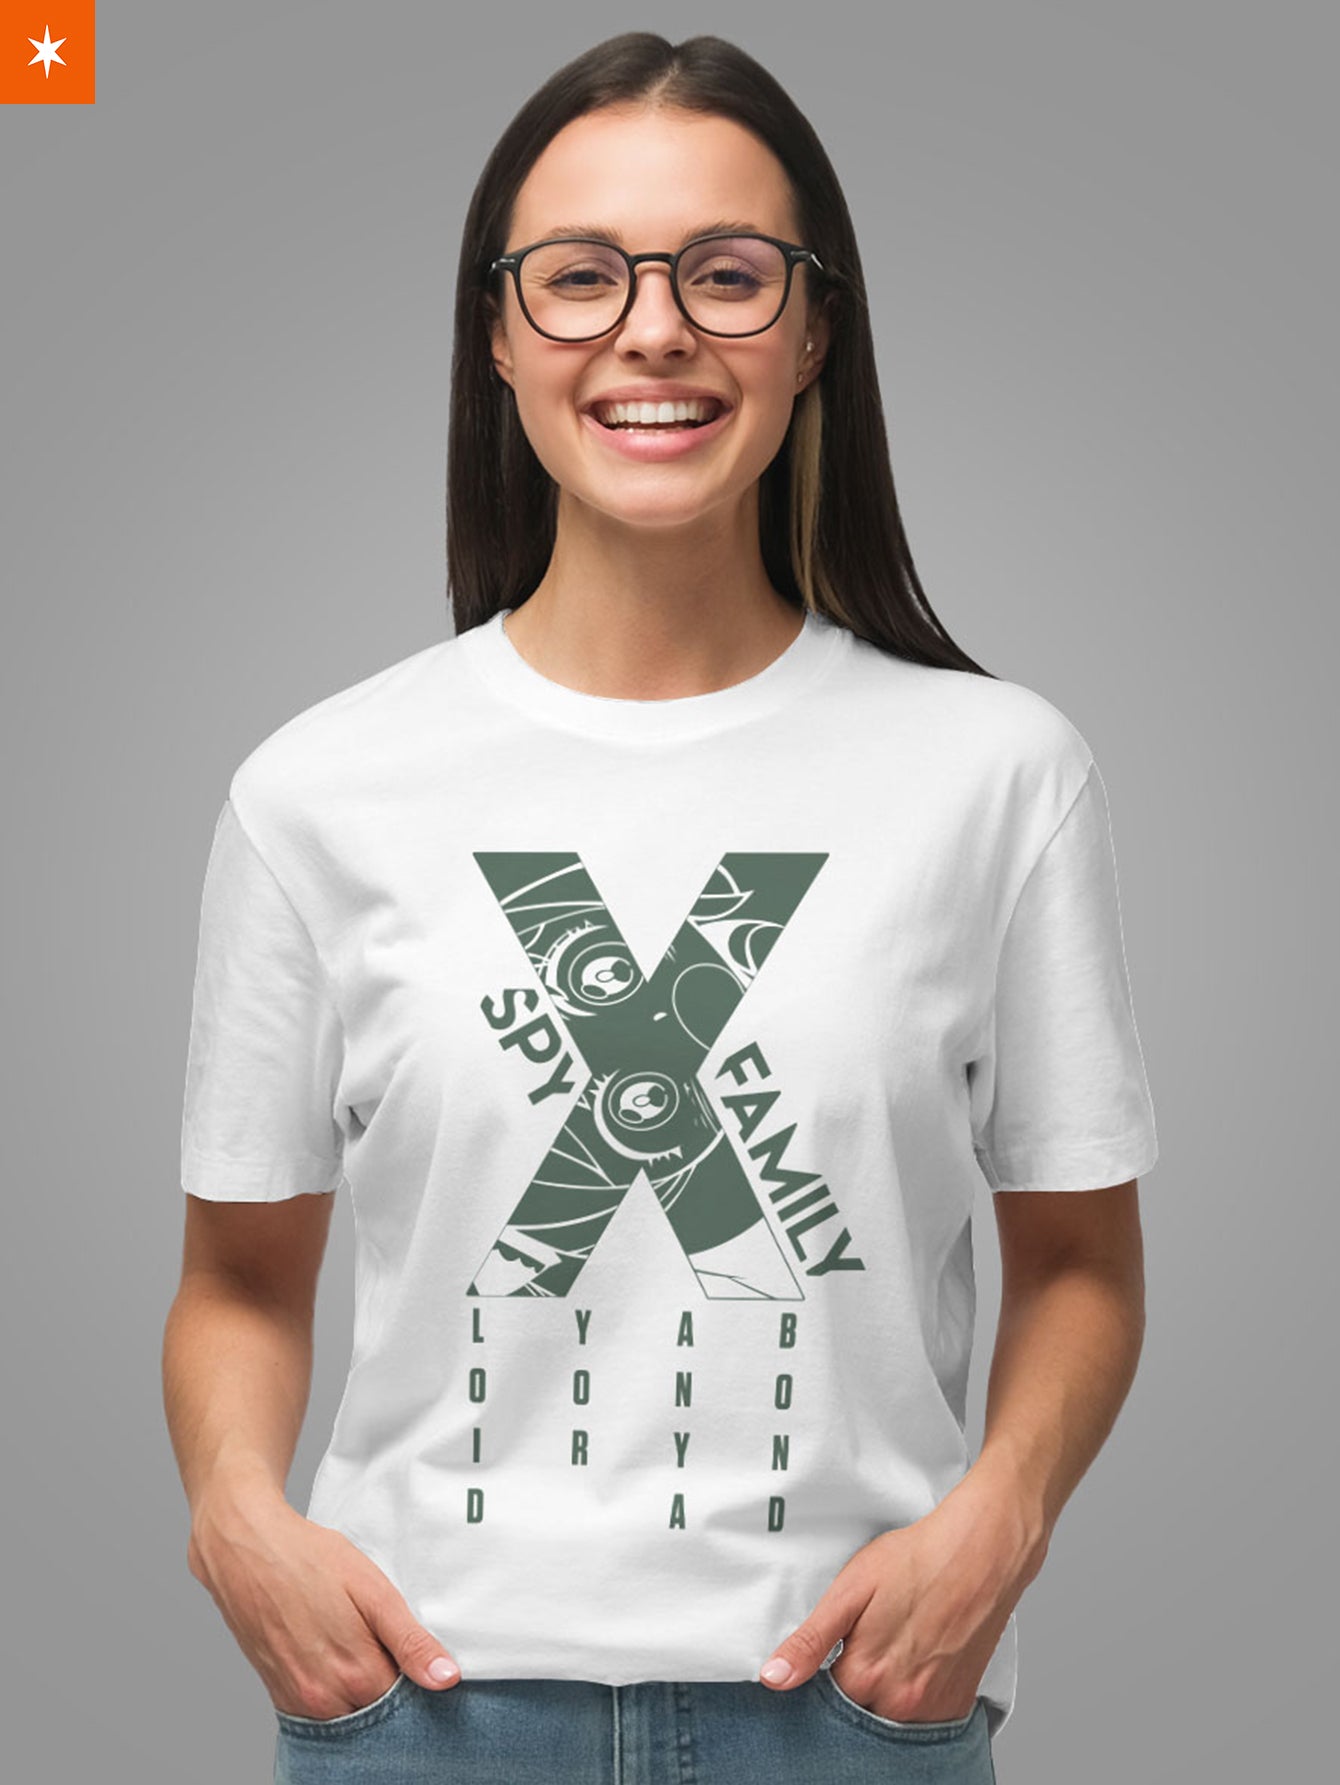 Fandomaniax - The Forgers Unisex T-Shirt